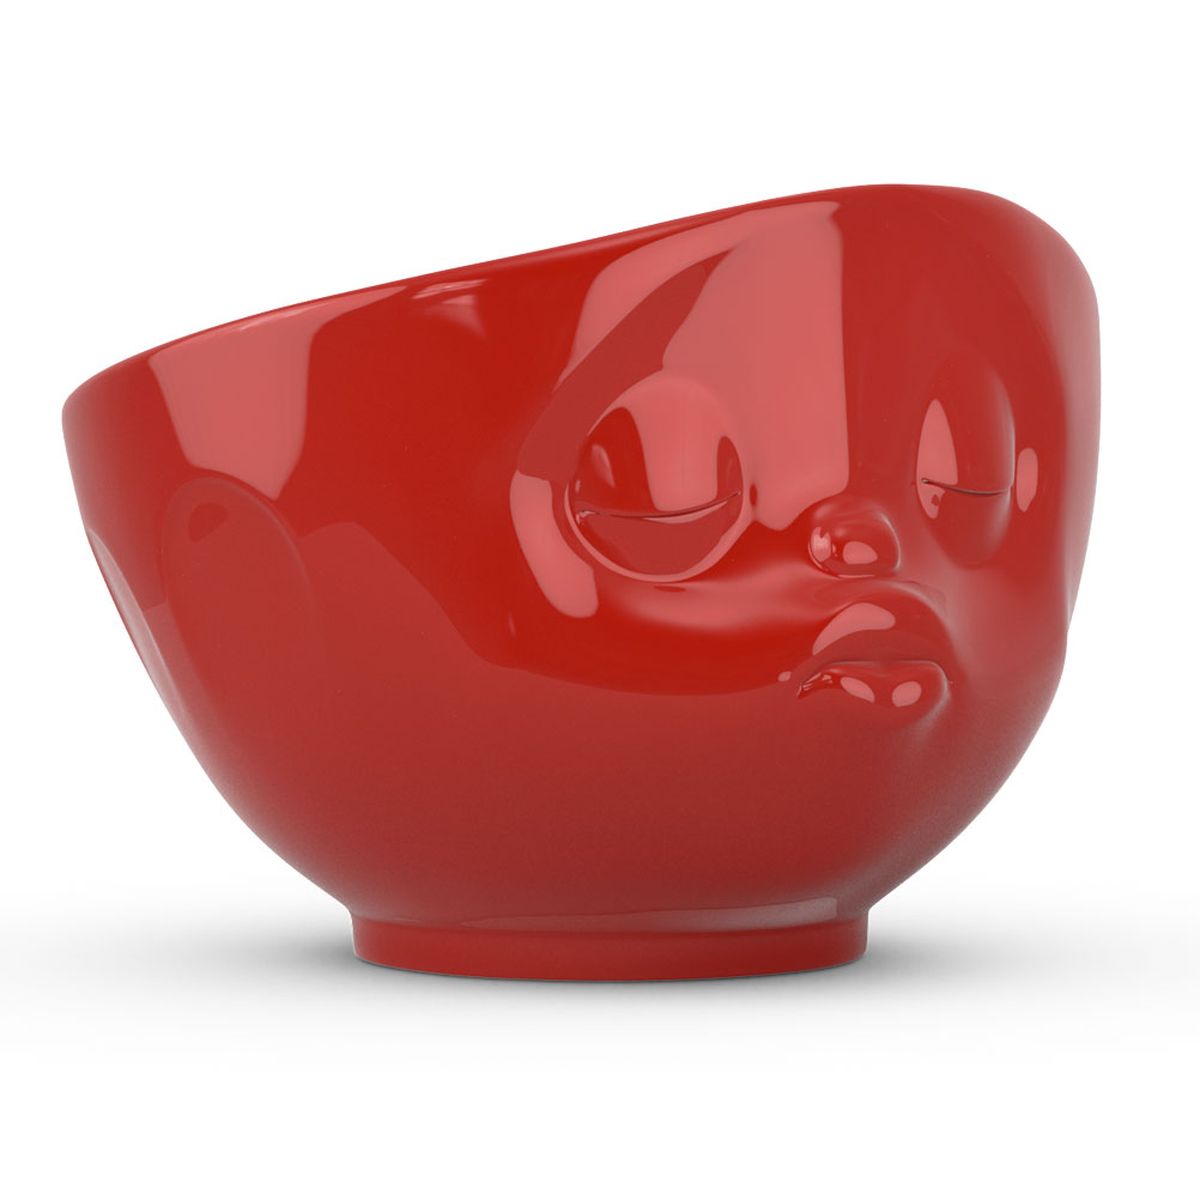 Large hotel porcelain bowl Tassen - Kissing red